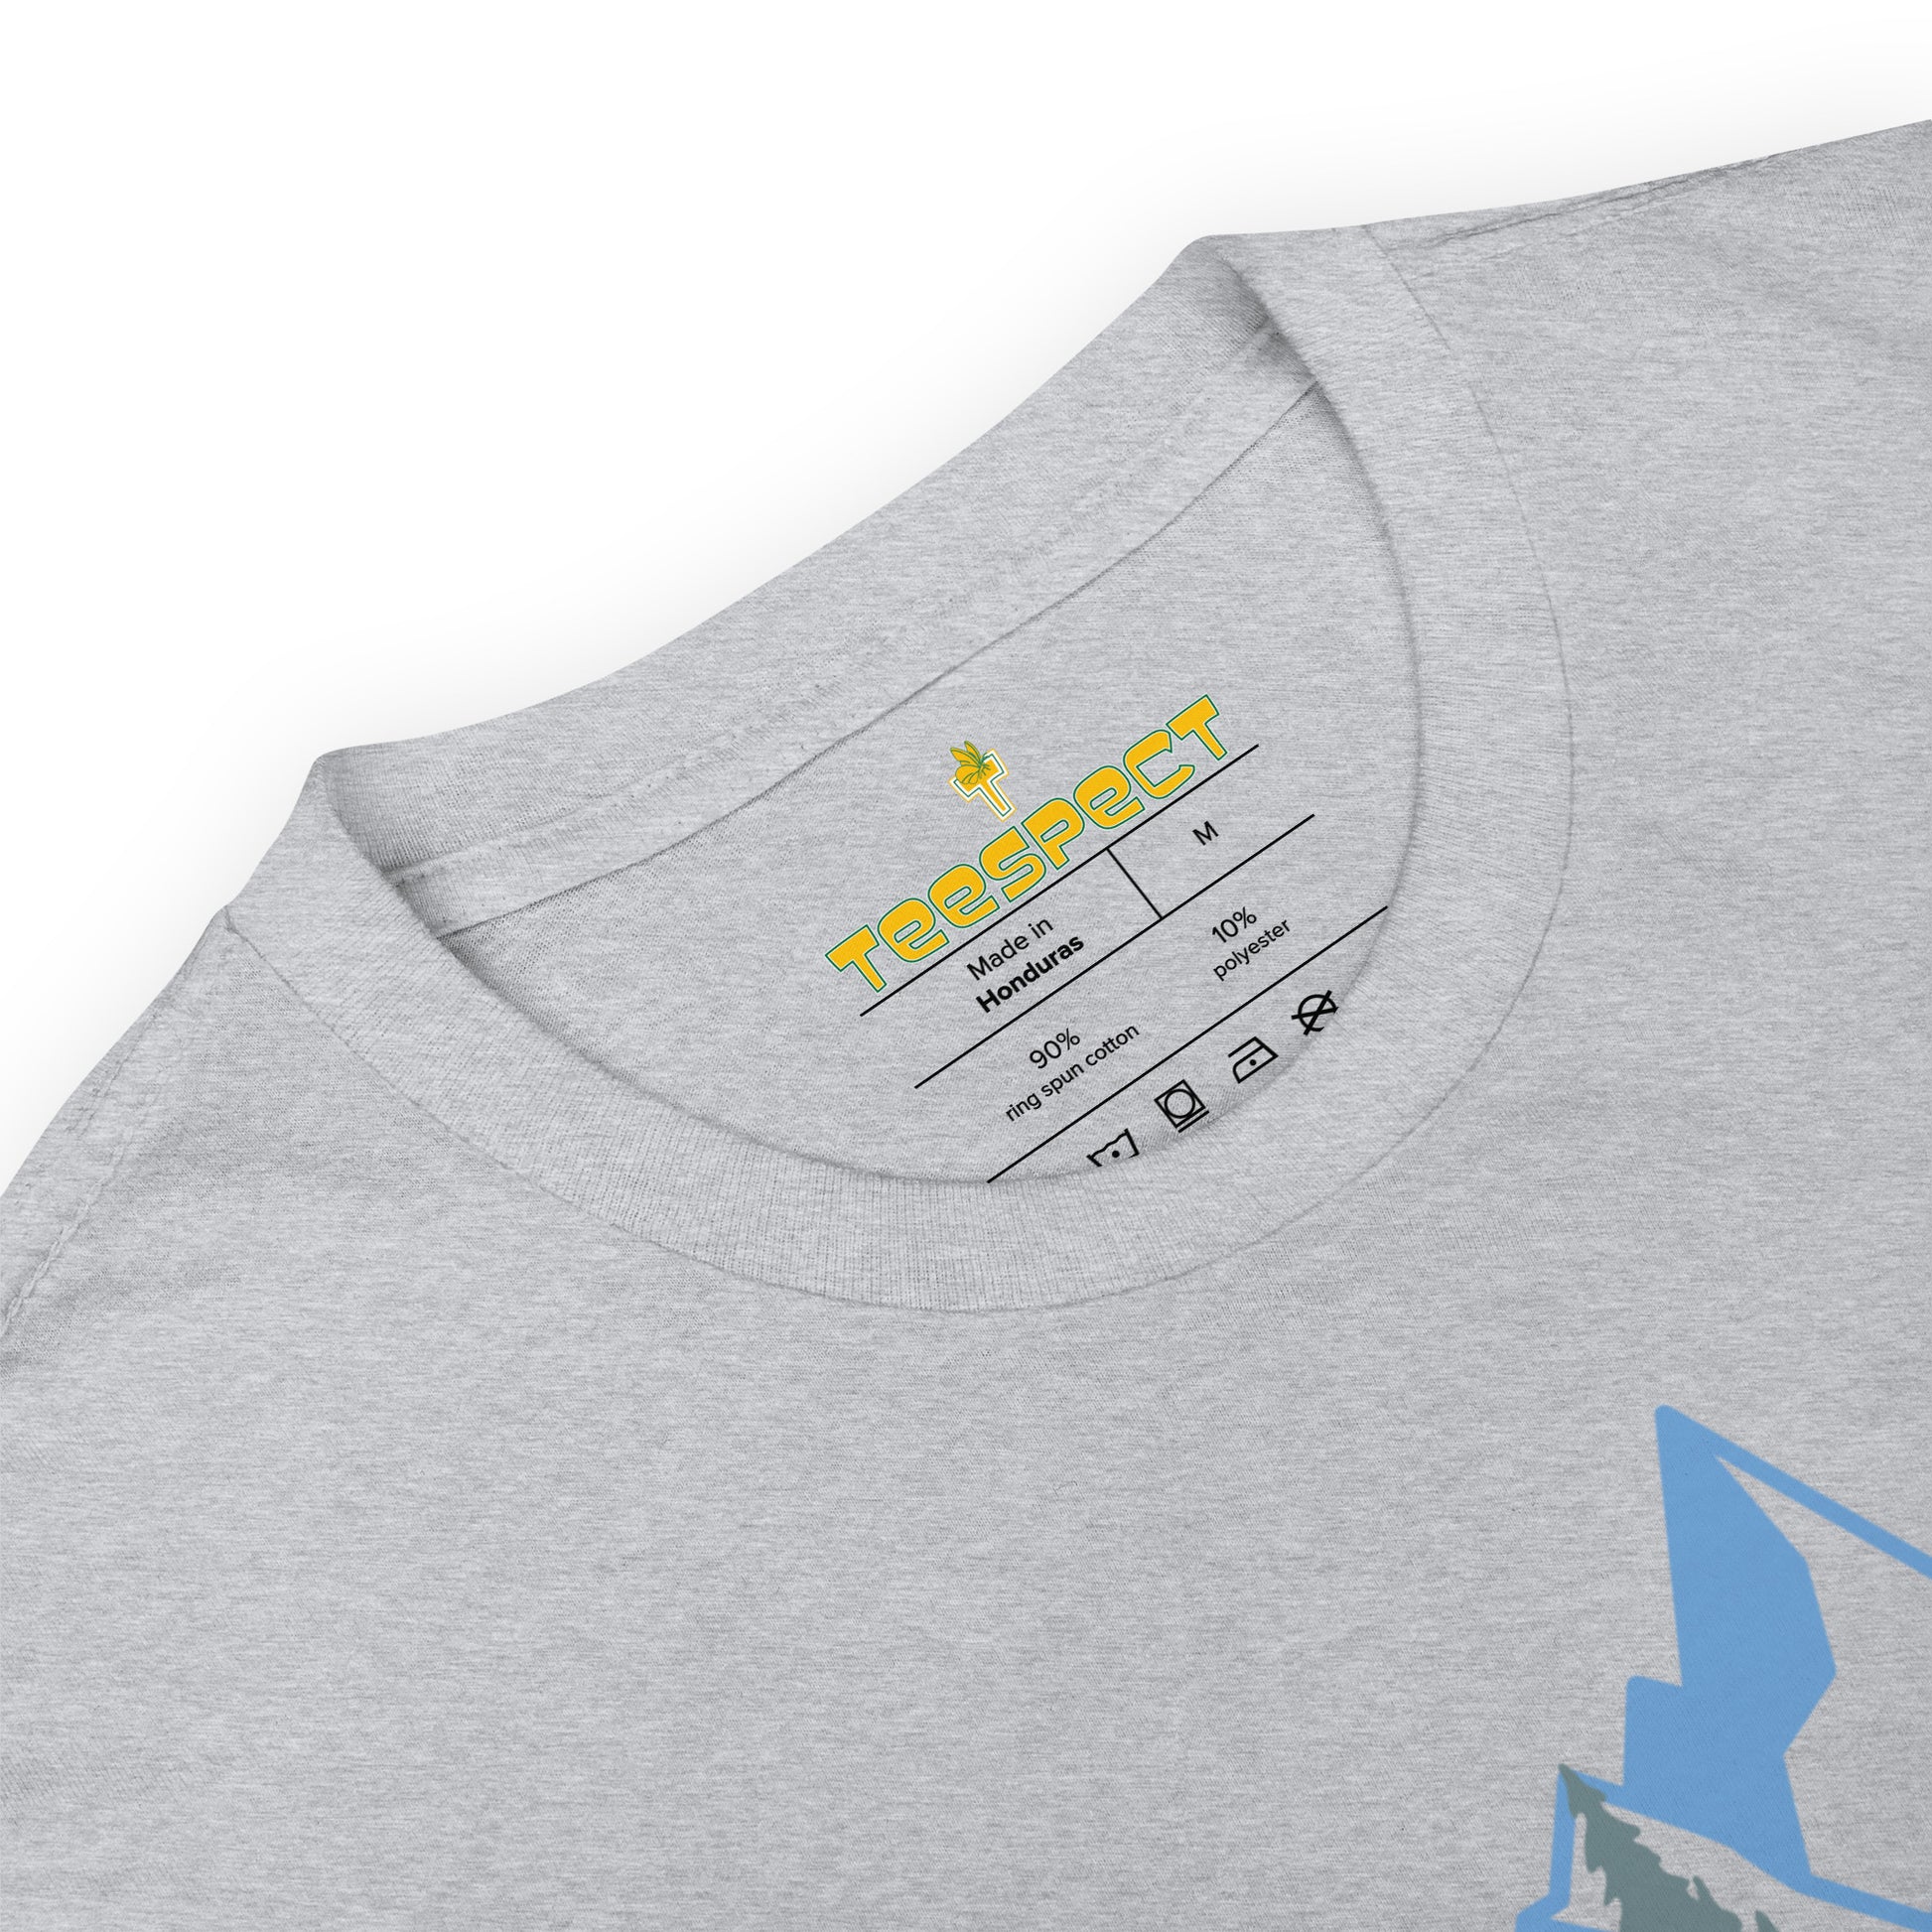 LOVE Nature Mountains Short-Sleeve Unisex T-Shirt TeeSpect